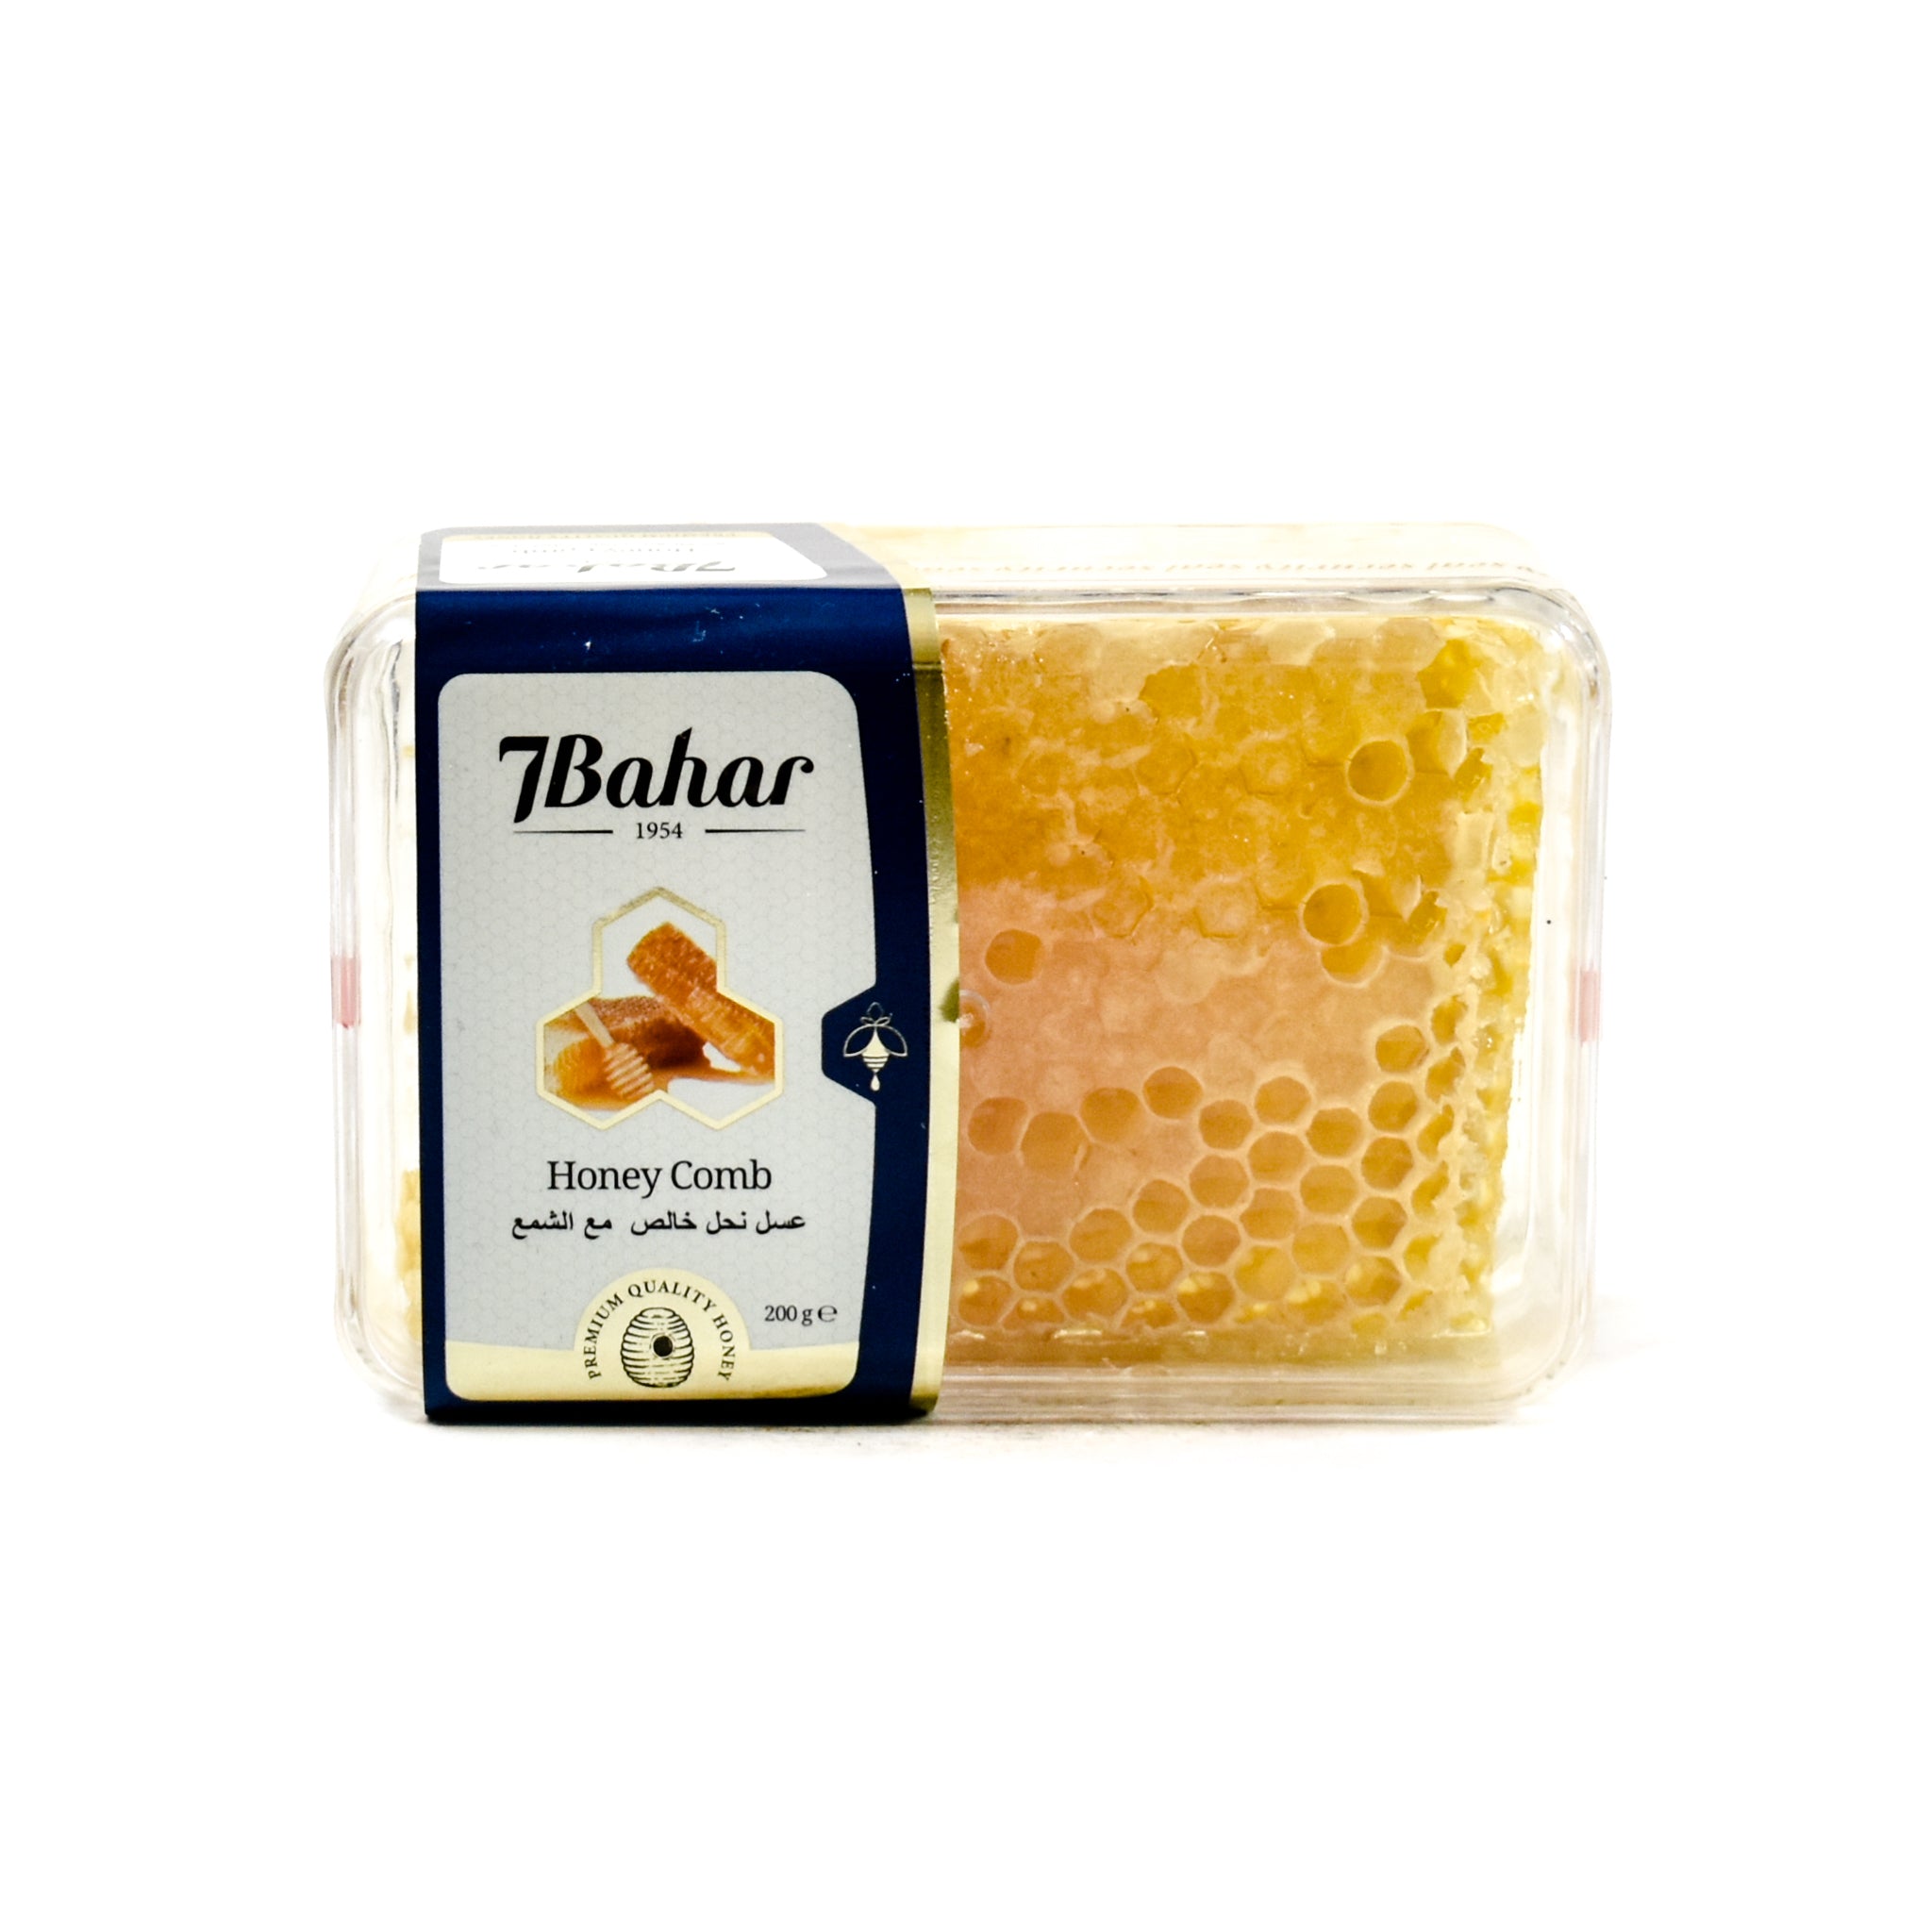 Centaur Real Honeycomb 200g Ingredients Jam Honey & Preserves